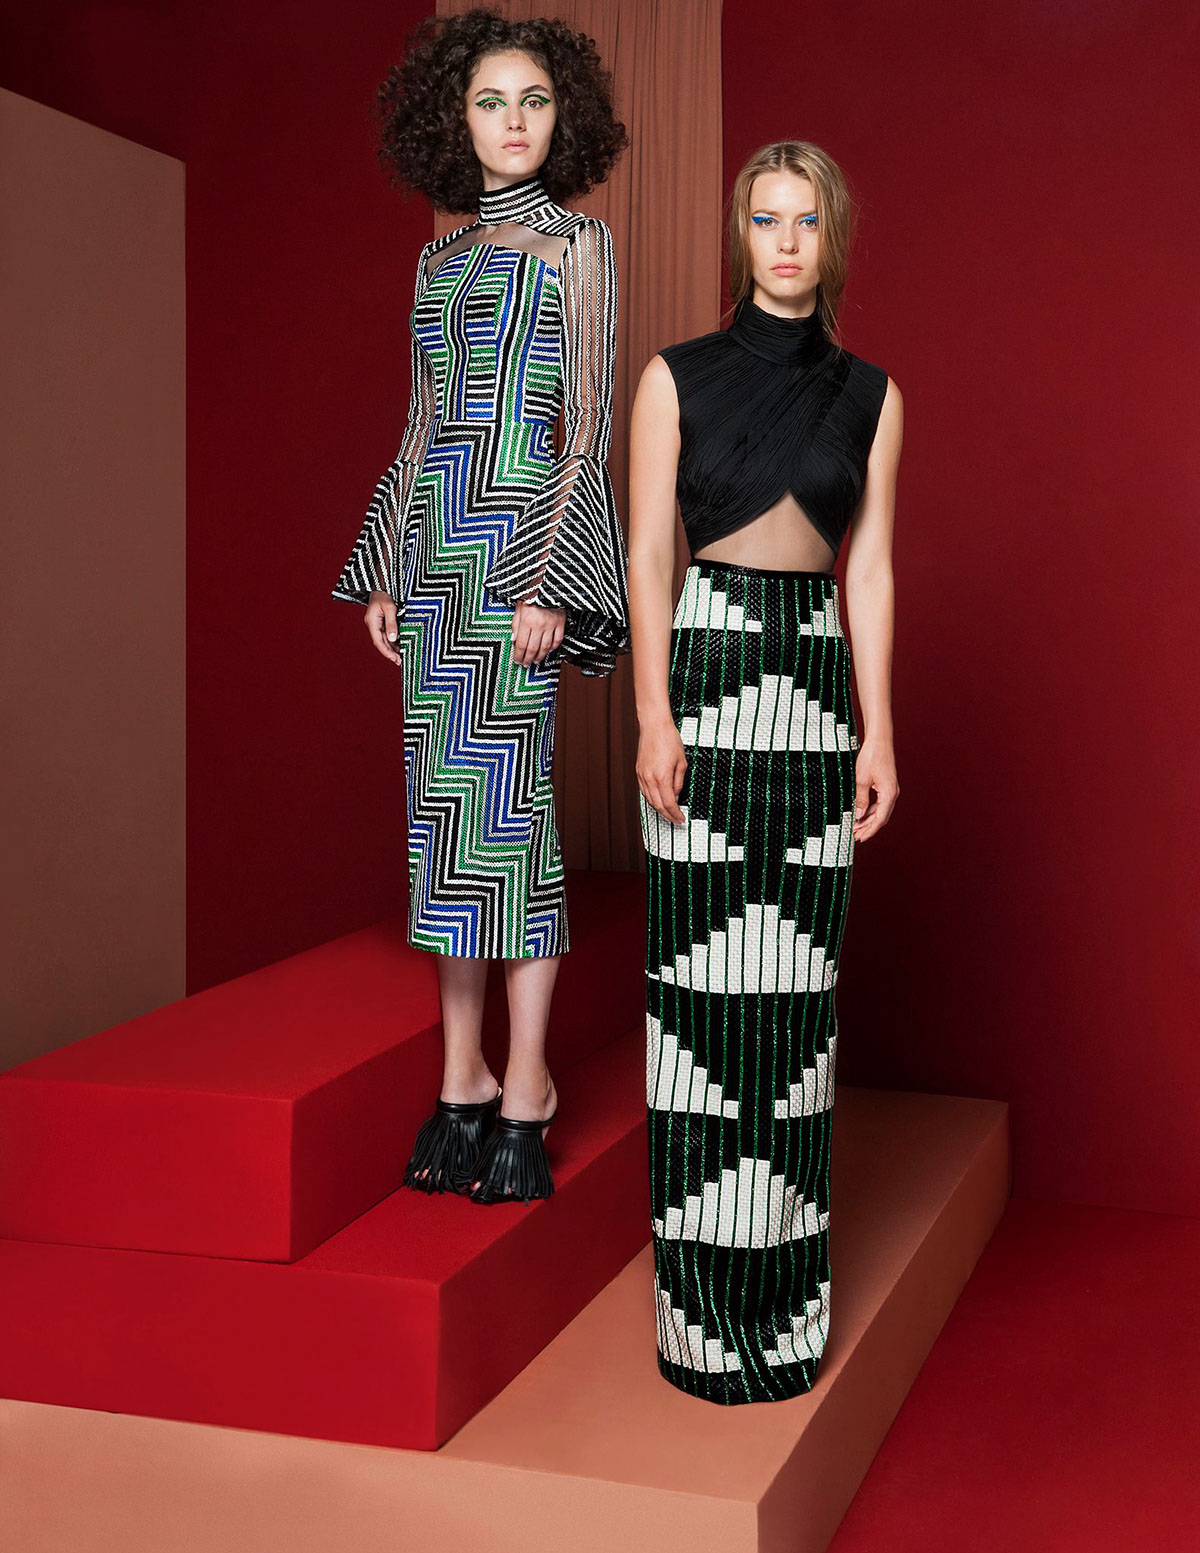 Paris haute couture dress fabric illusion pattern model stripes Fun